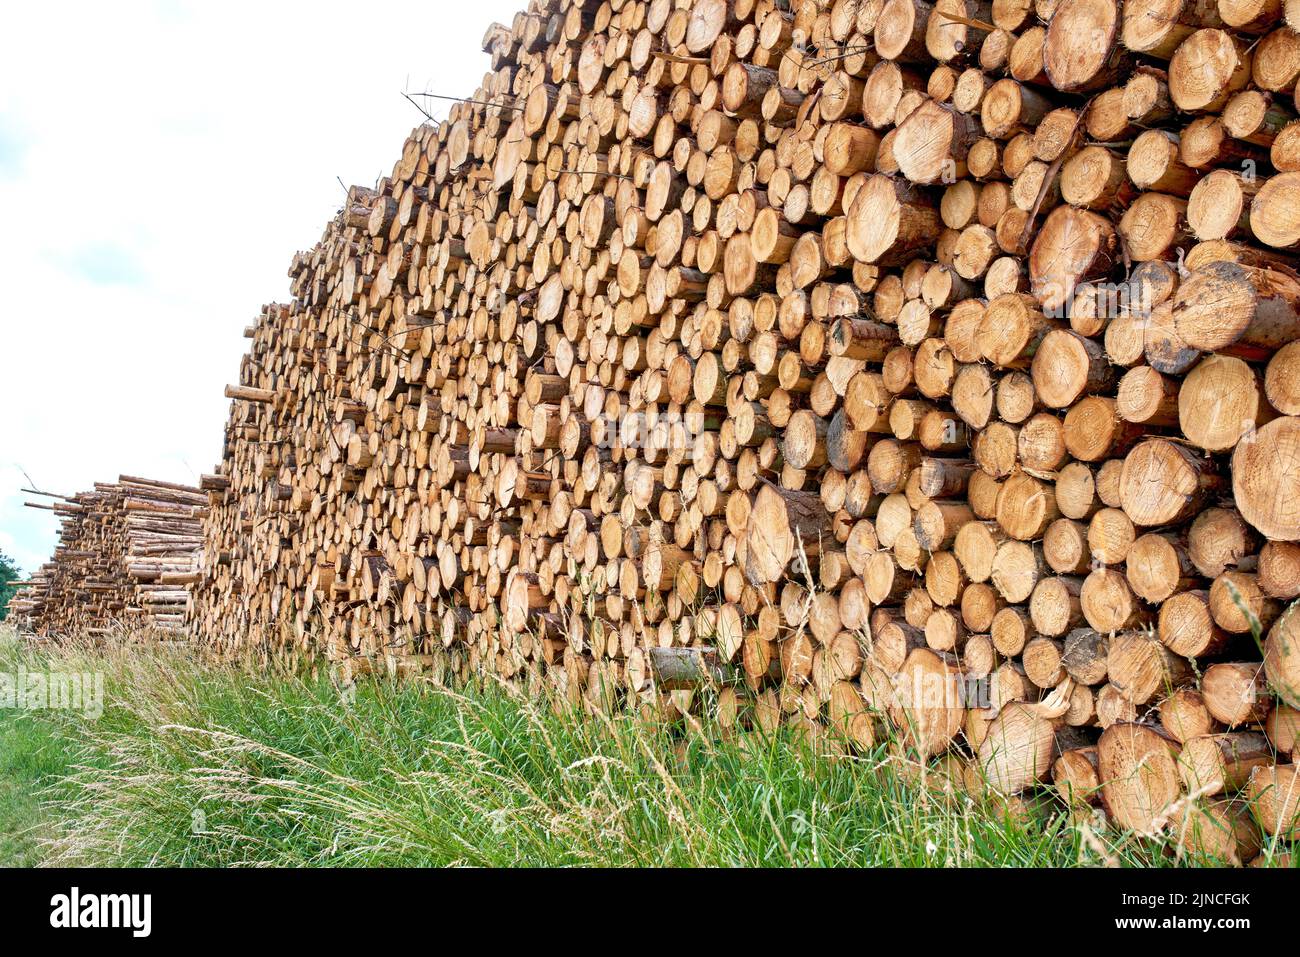 Woodpile - Lumber Industry. Lumber industry - lot of woodpiles. Stock Photo